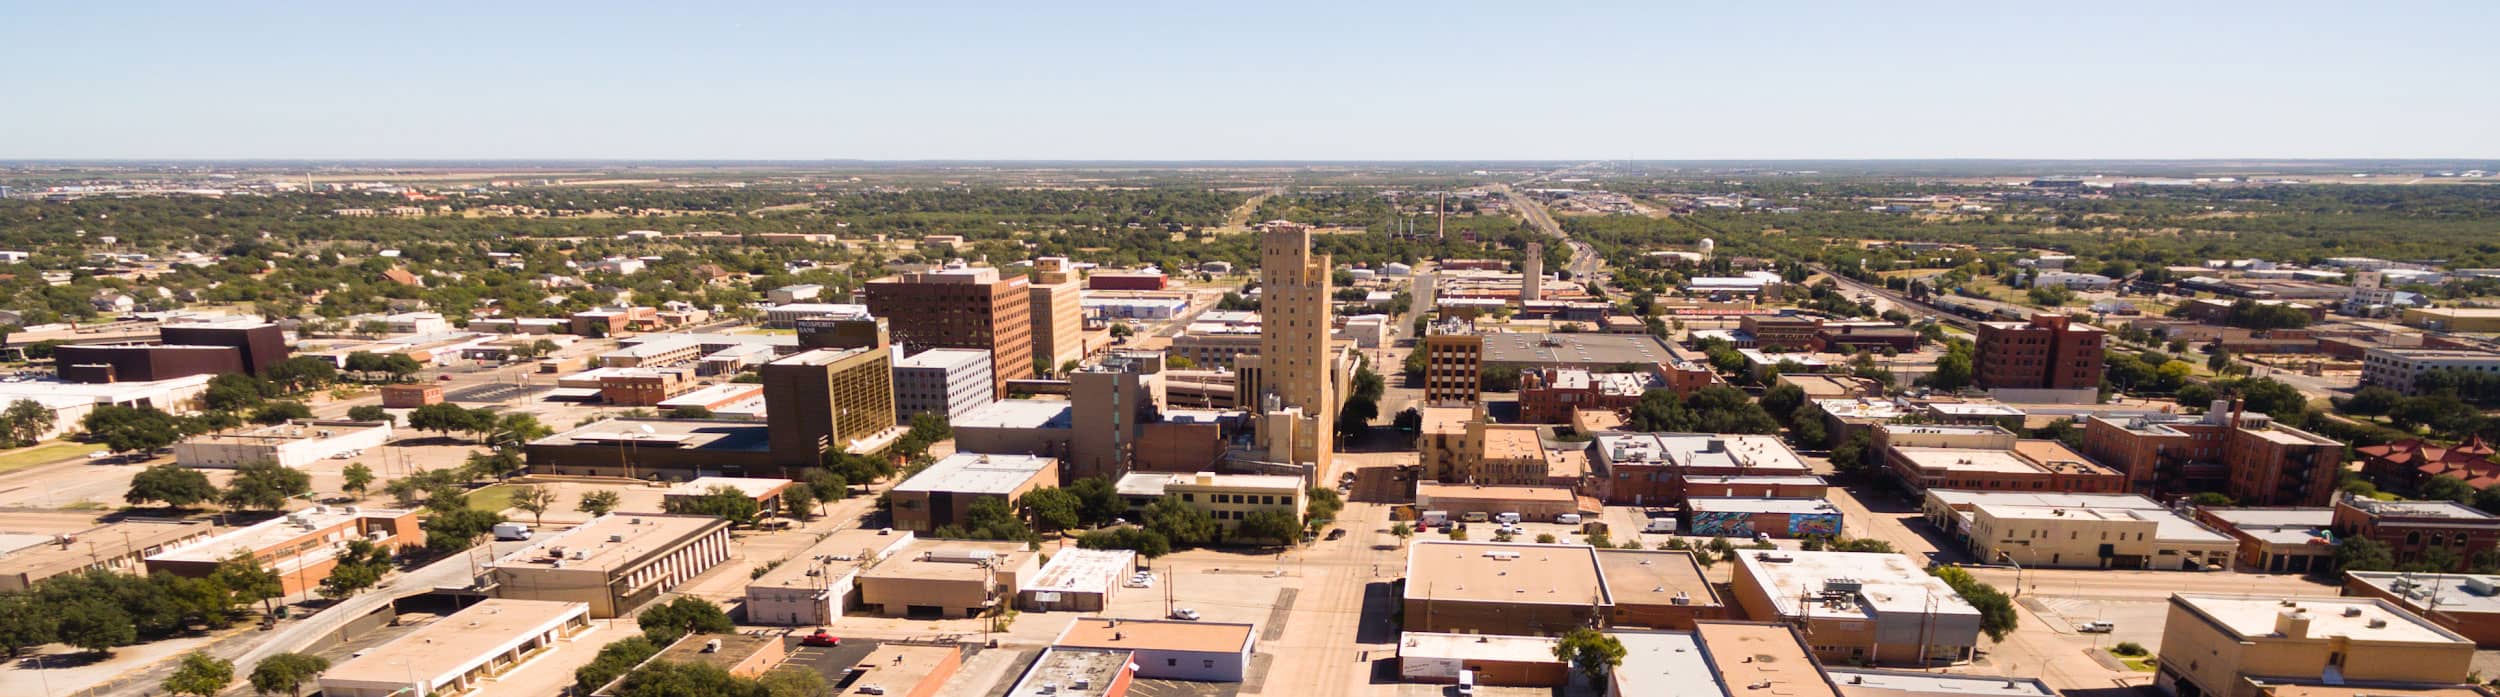 town skyline of Lubbock, Texas